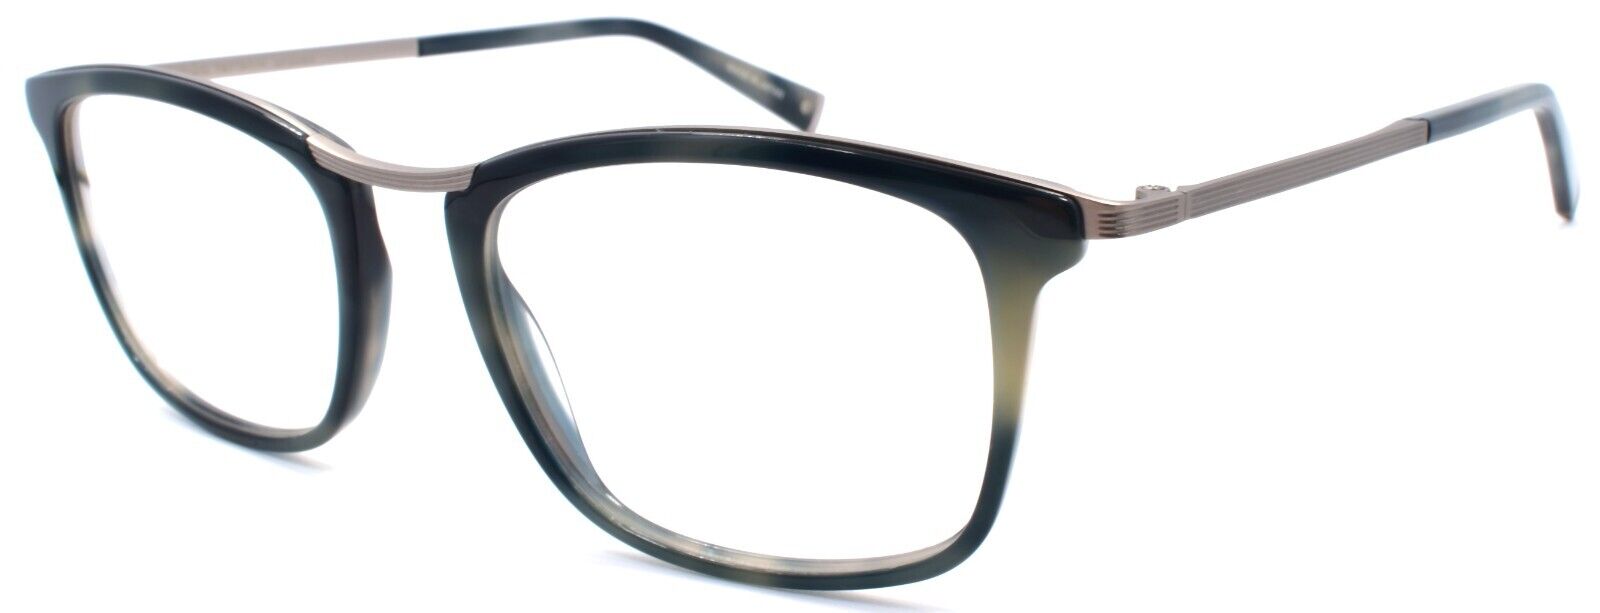 1-John Varvatos V375 Men's Eyeglasses Frames 53-20-145 Smoke Japan-751286310382-IKSpecs